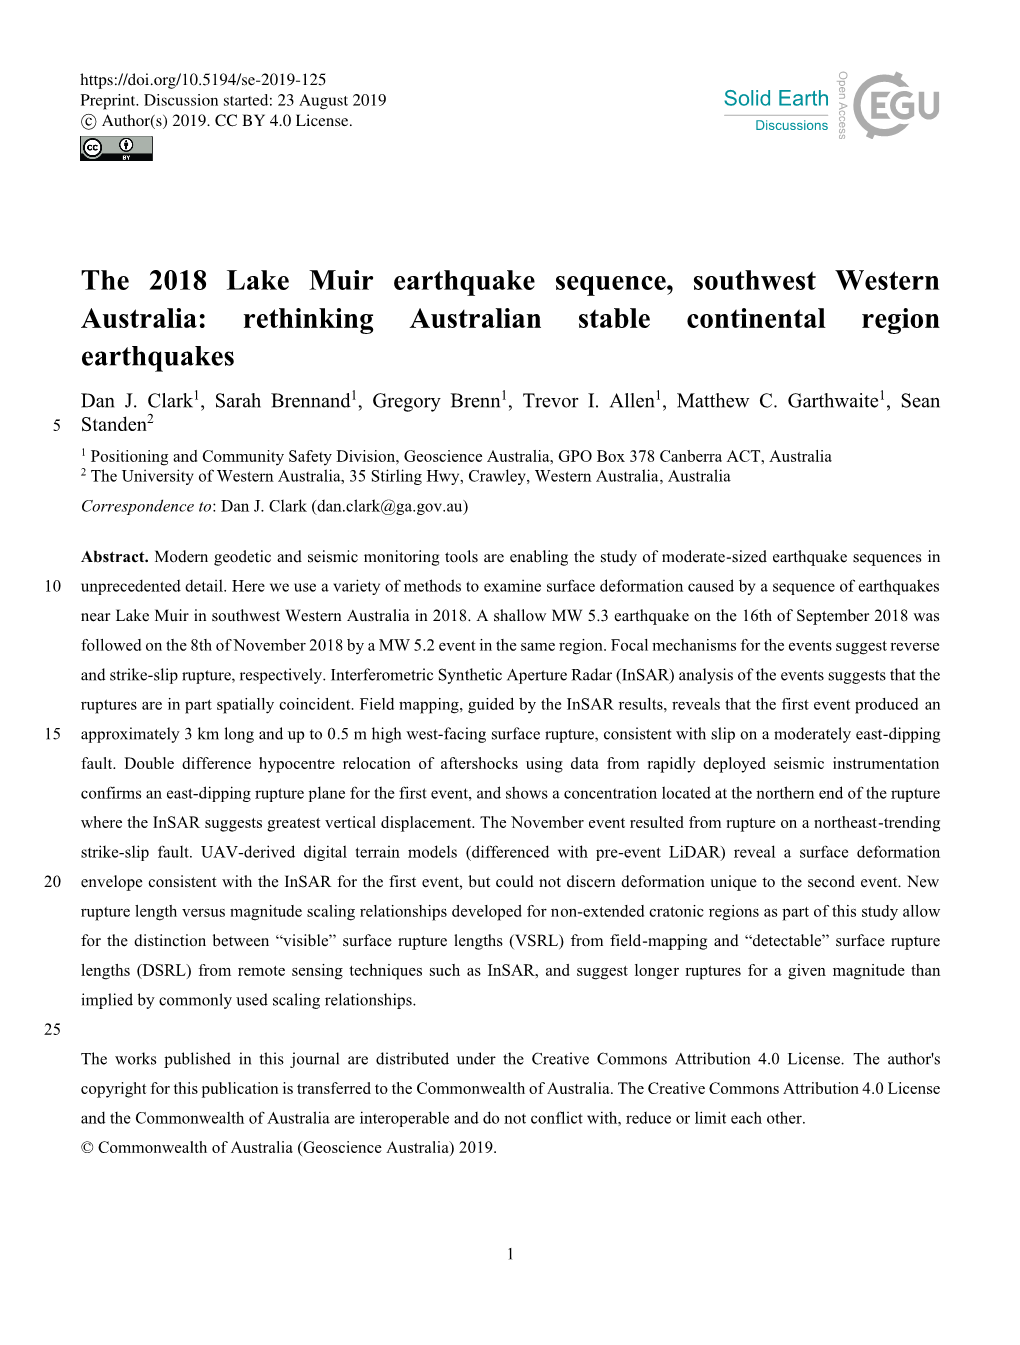 The 2018 Lake Muir Earthquake Sequence, Southwest Western Australia: Rethinking Australian Stable Continental Region Earthquakes Dan J